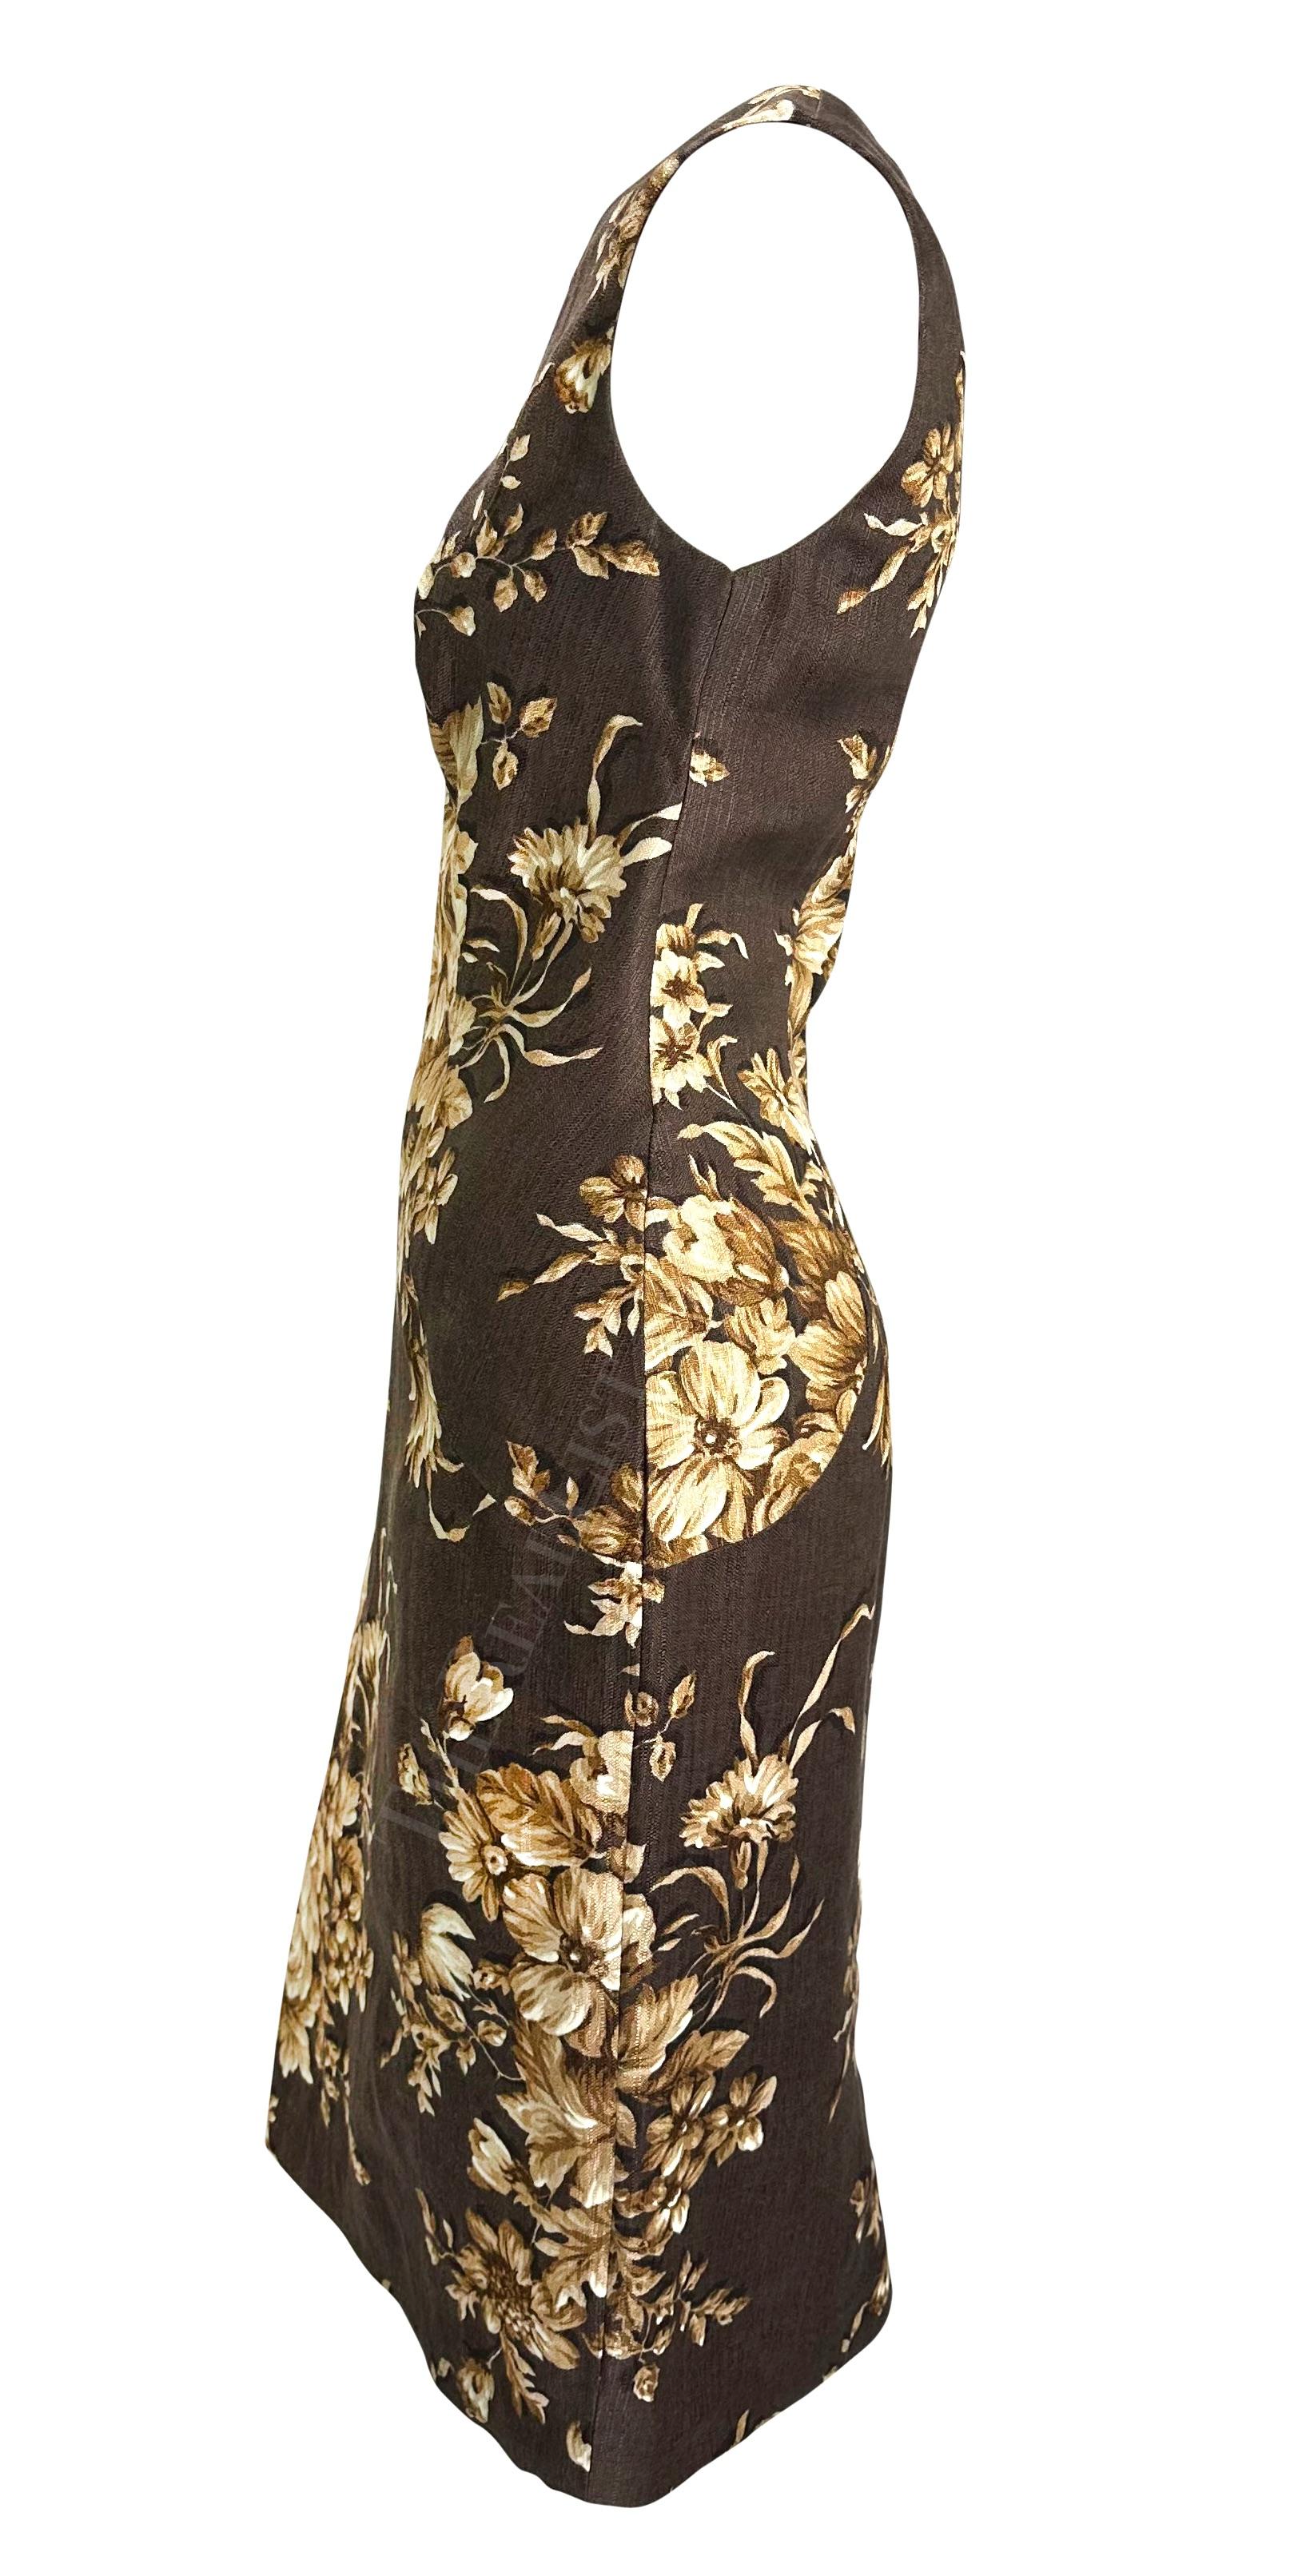 Women's S/S 1997 Dolce & Gabbana Runway Brown Beige Floral Sleeveless Dress For Sale